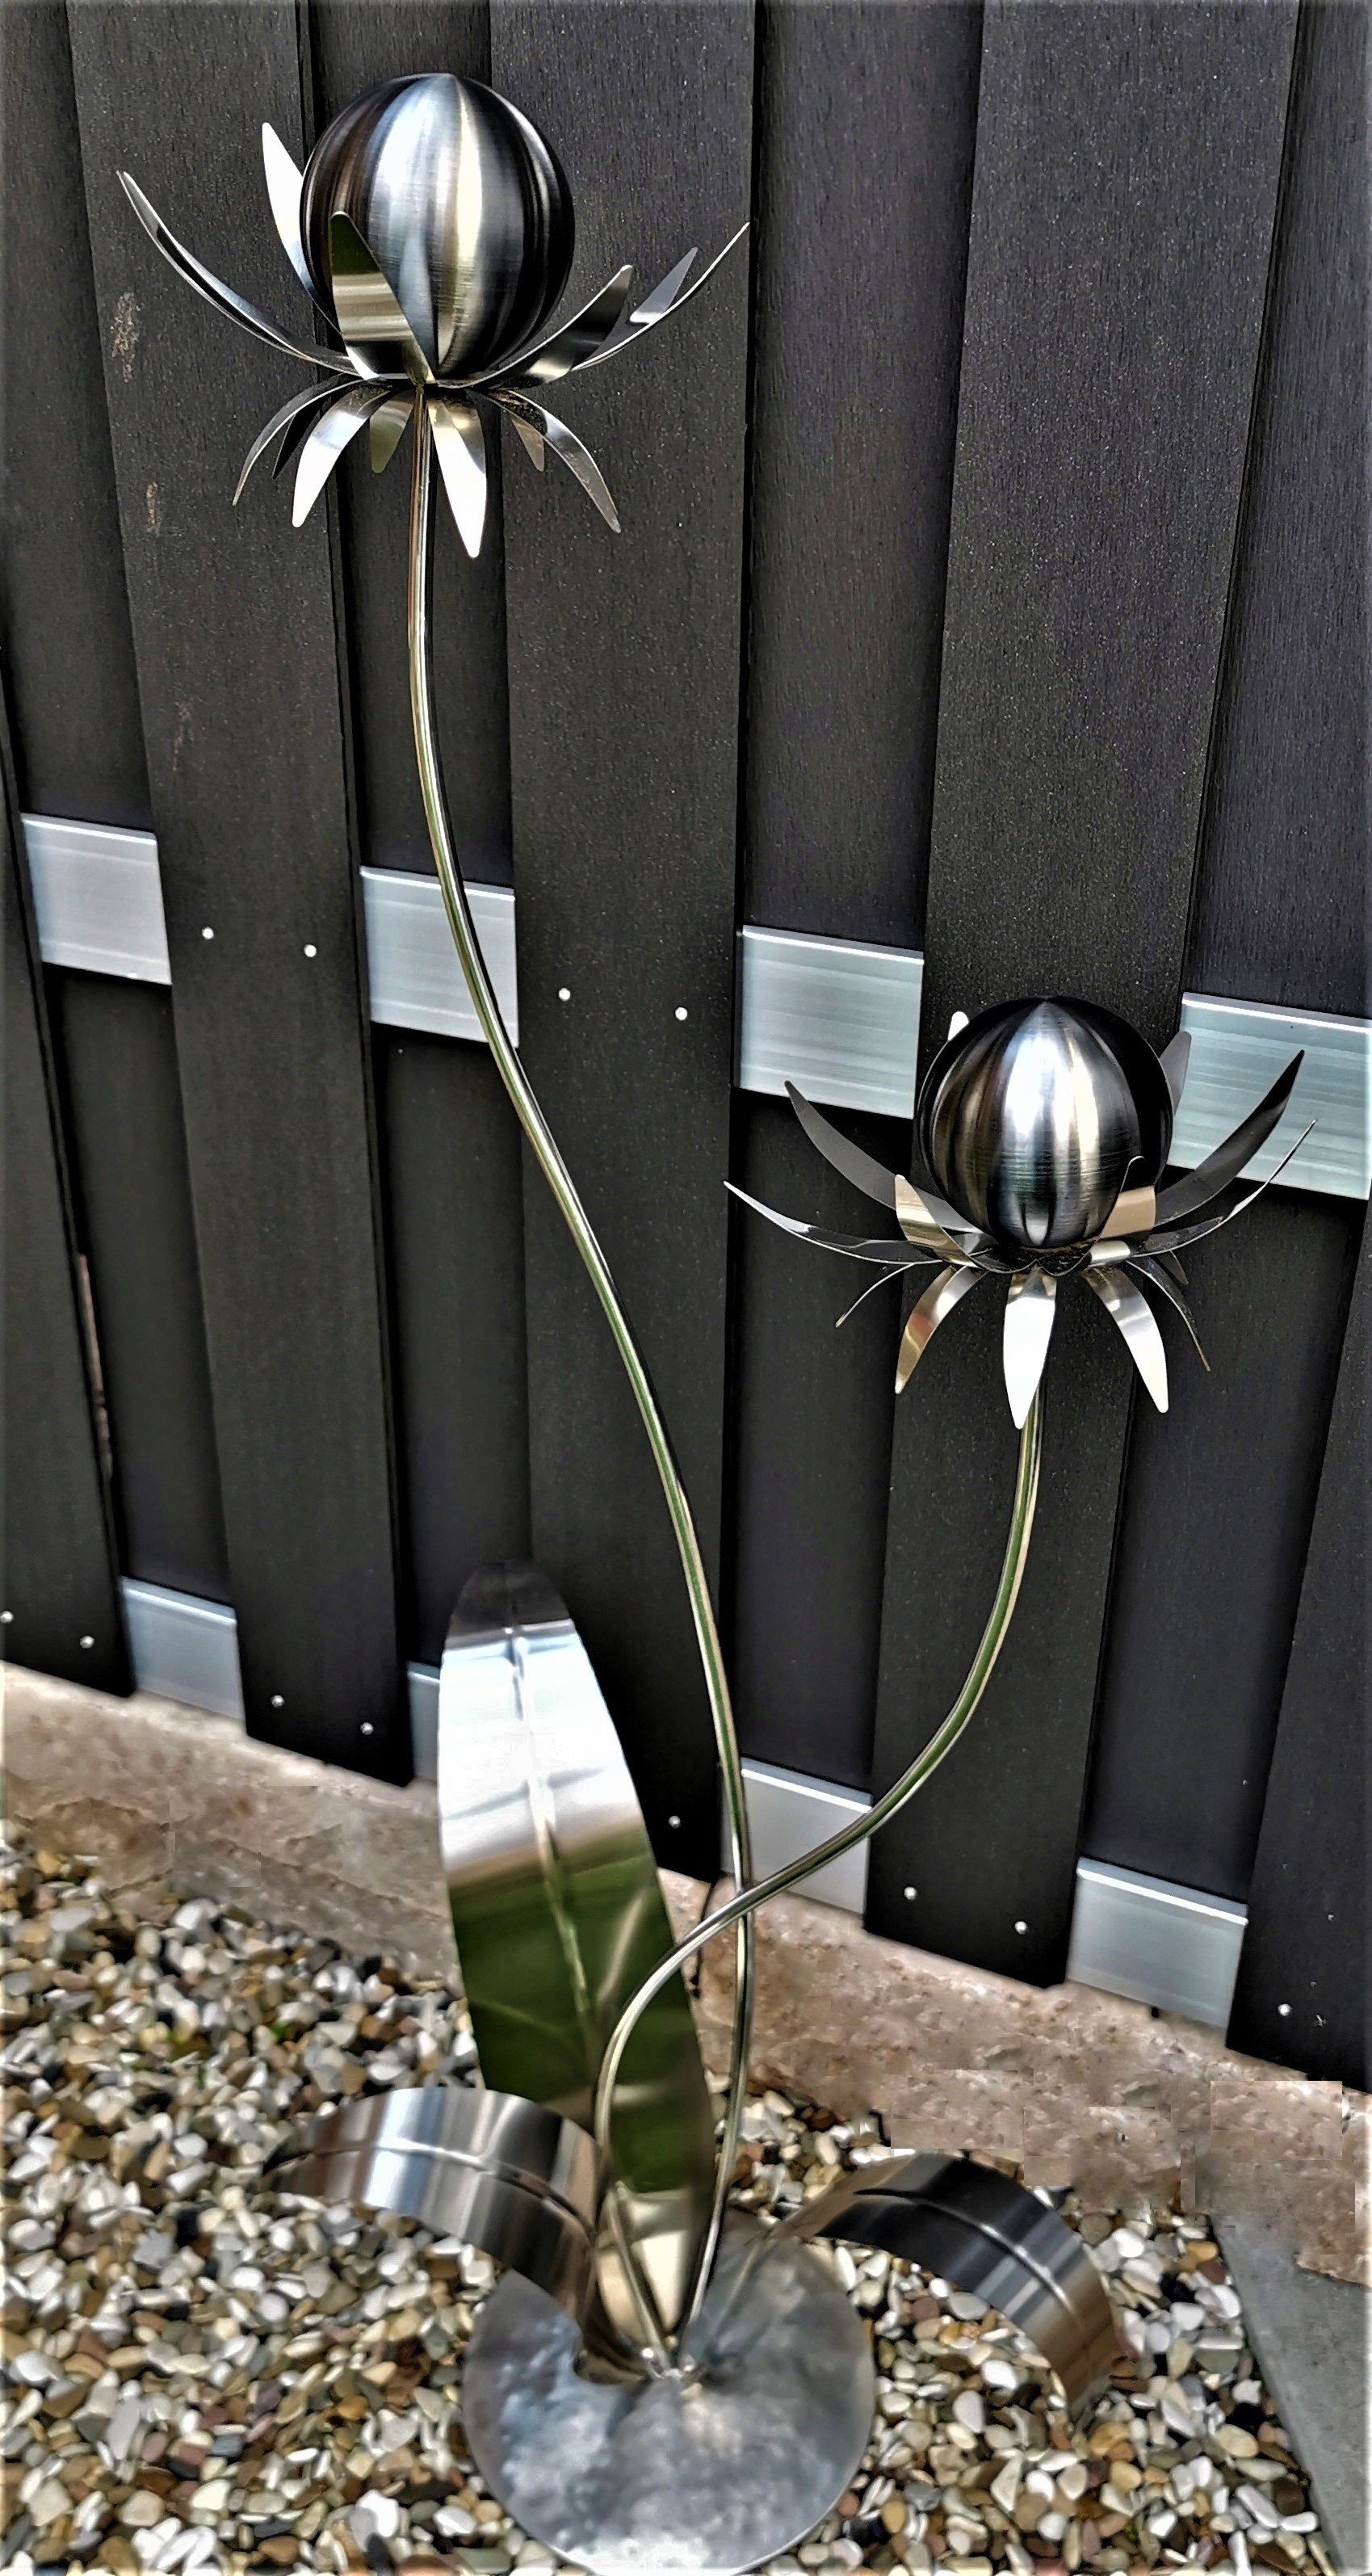 Jürgen Bocker Garten-Ambiente Gartenstecker Skulptur Blume Milano Edelstahl 120 cm Kugel Edelstahl schwarz matt Standfuß Gartendeko